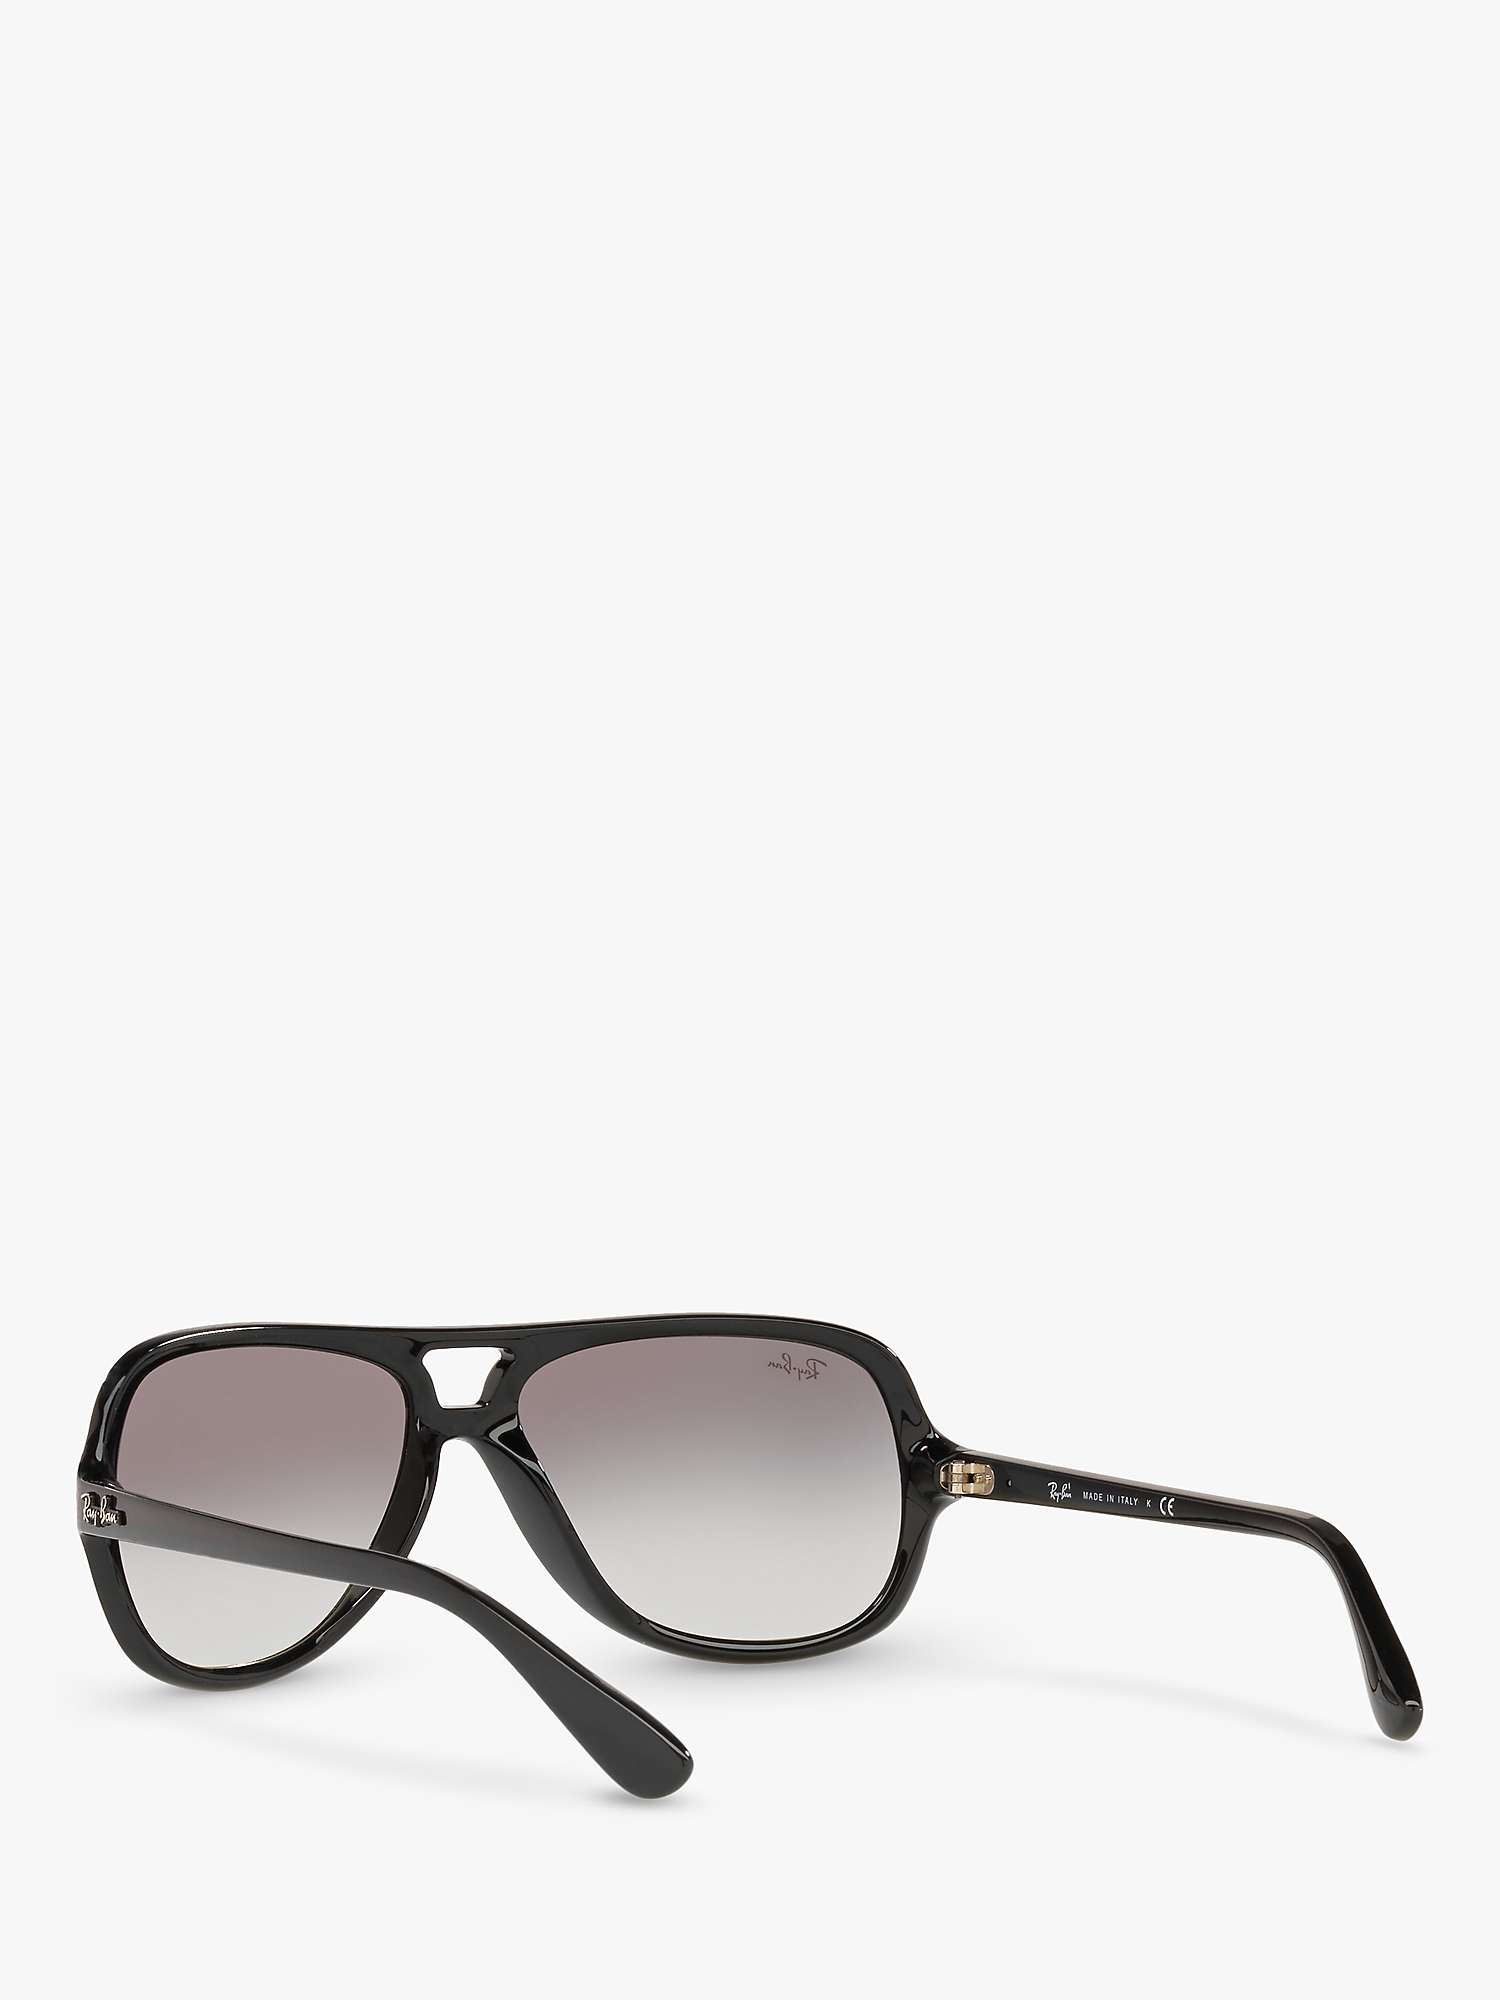 Buy Ray-Ban RB4162 Men's Aviator Sunglasses, Black/Grey Gradient Online at johnlewis.com